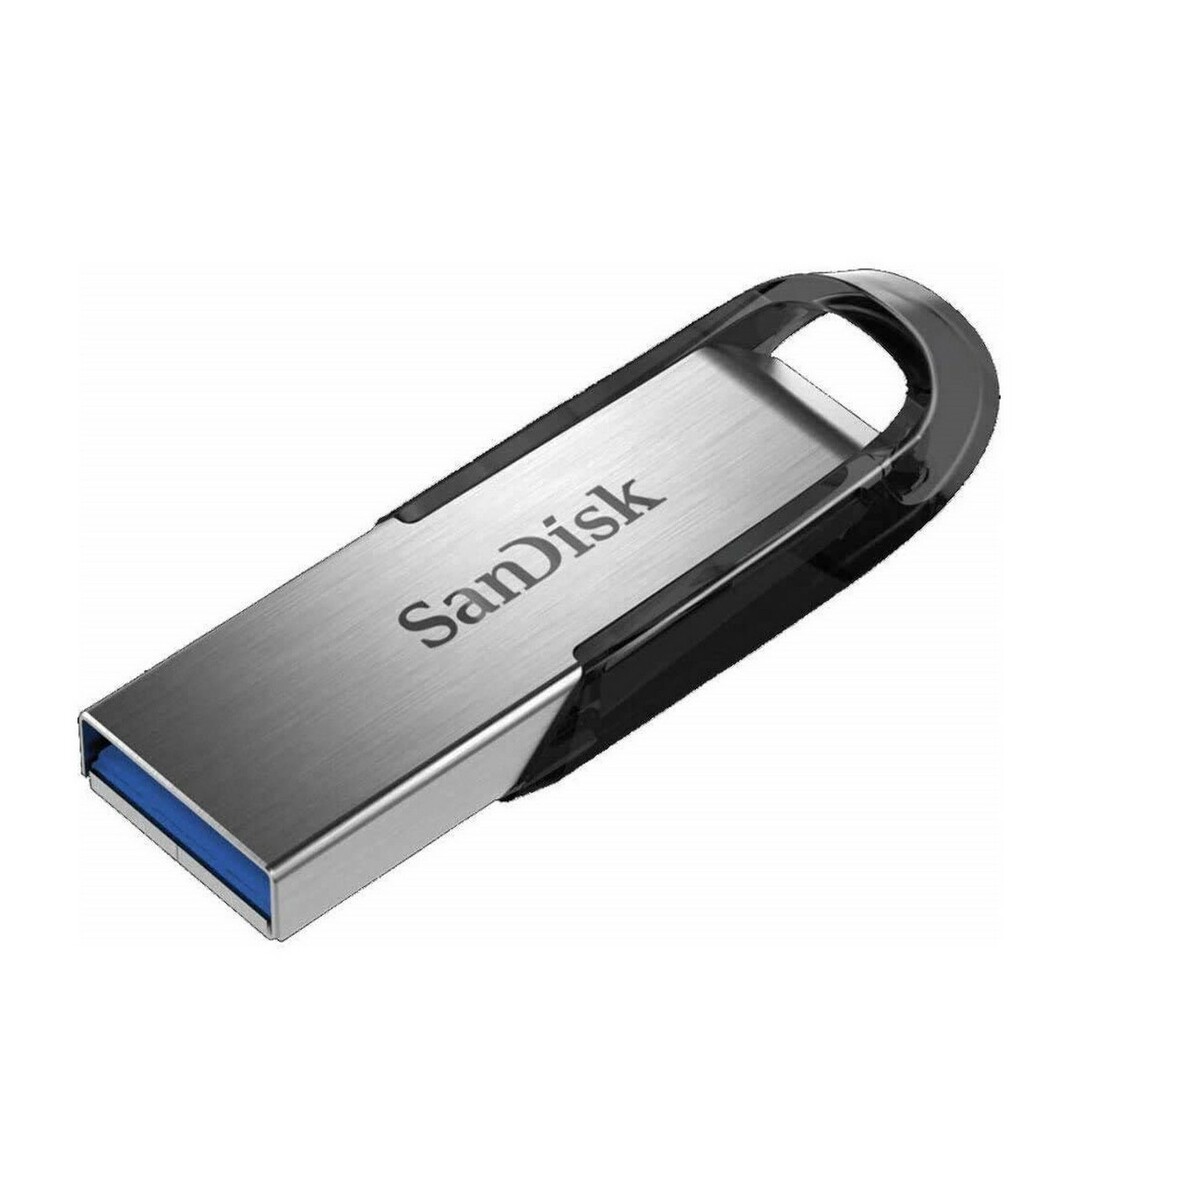 Sandisk Flash Drive Flair Metal 265GB